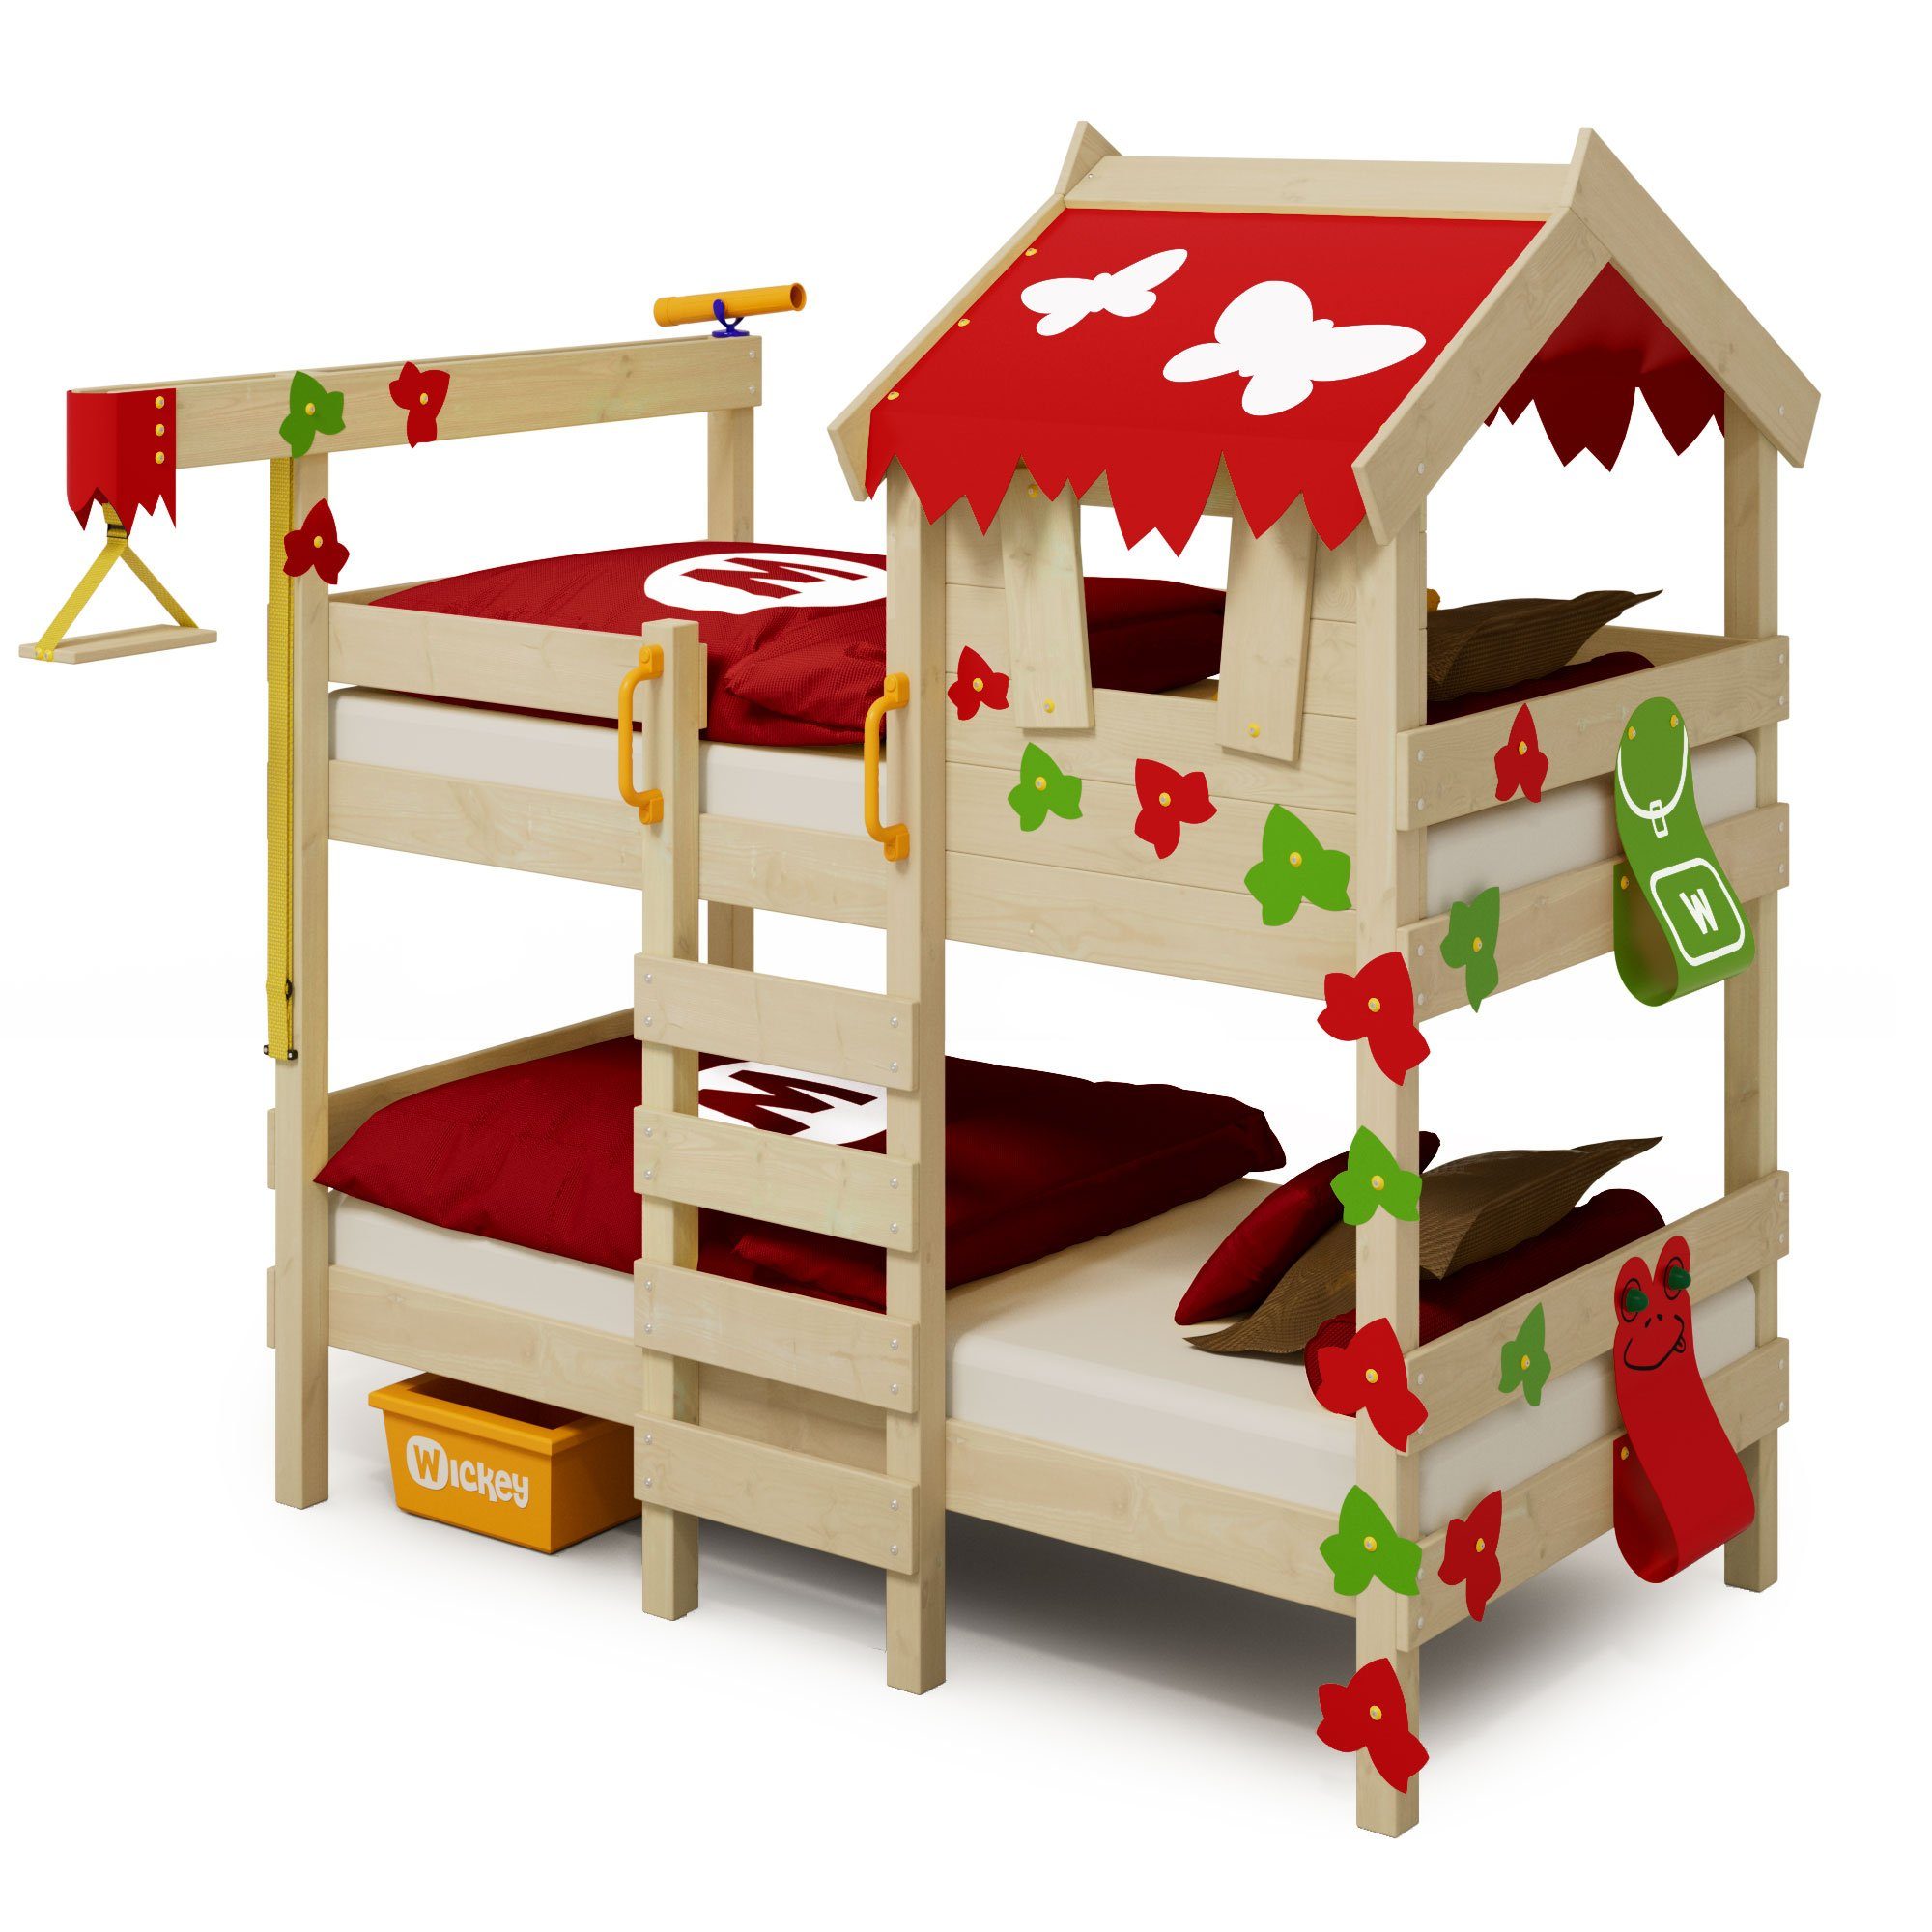 Wickey Kinderbett Crazy Ivy, Spielbett, 90 x 200 cm Hochbett (Holzpaket aus Pfosten und Brettern, Spielbett für Kinder), Massivholzbrett rot/apfelgrün